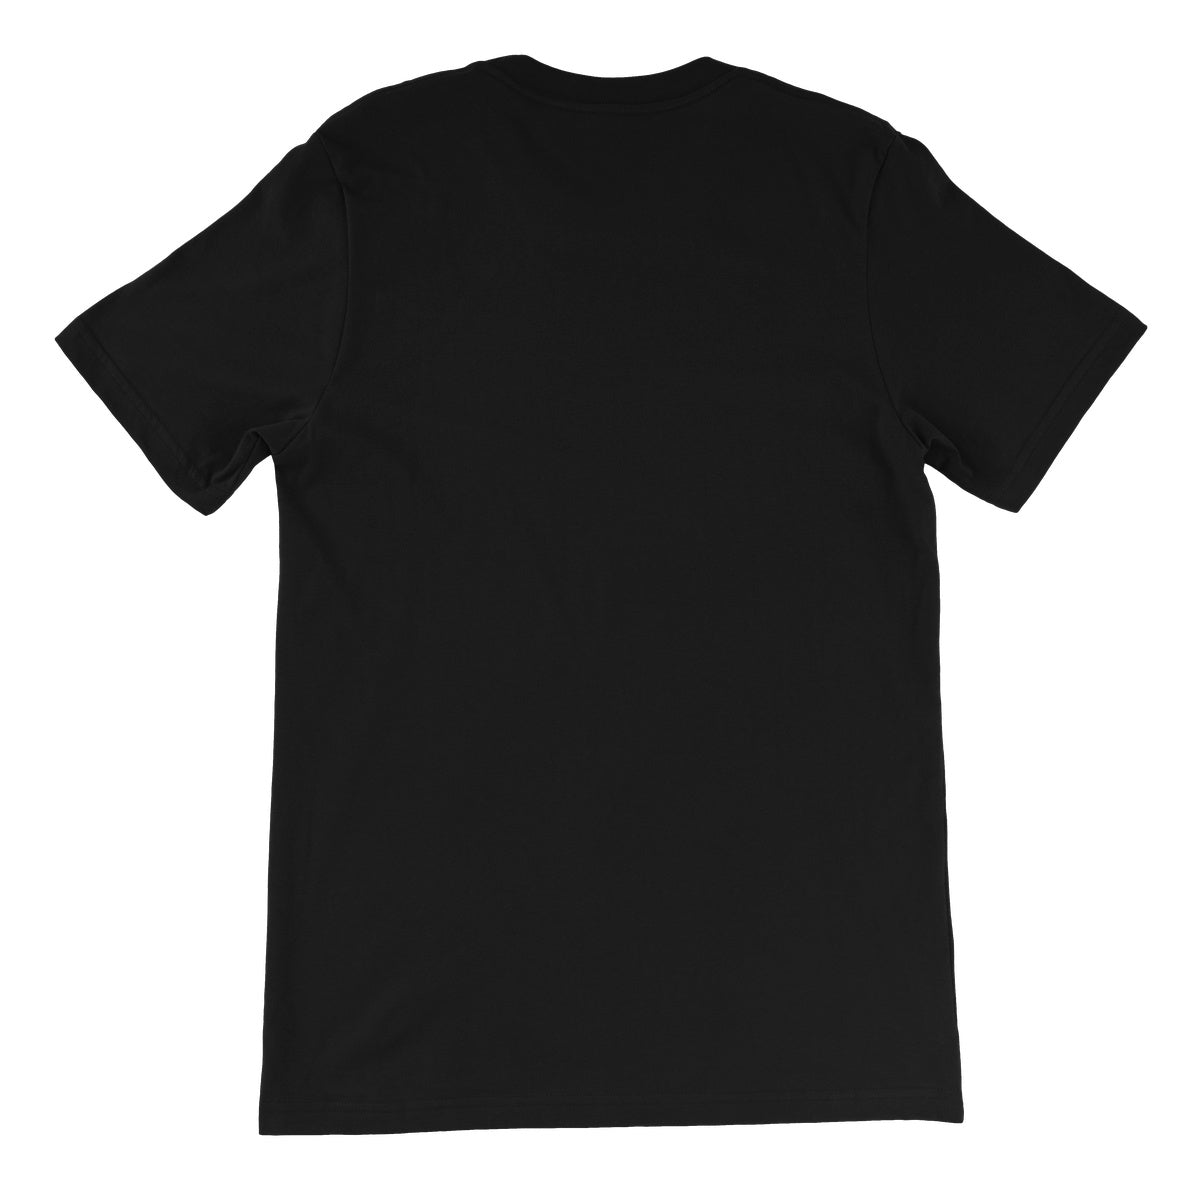 The Beans Unisex Short Sleeve T-Shirt